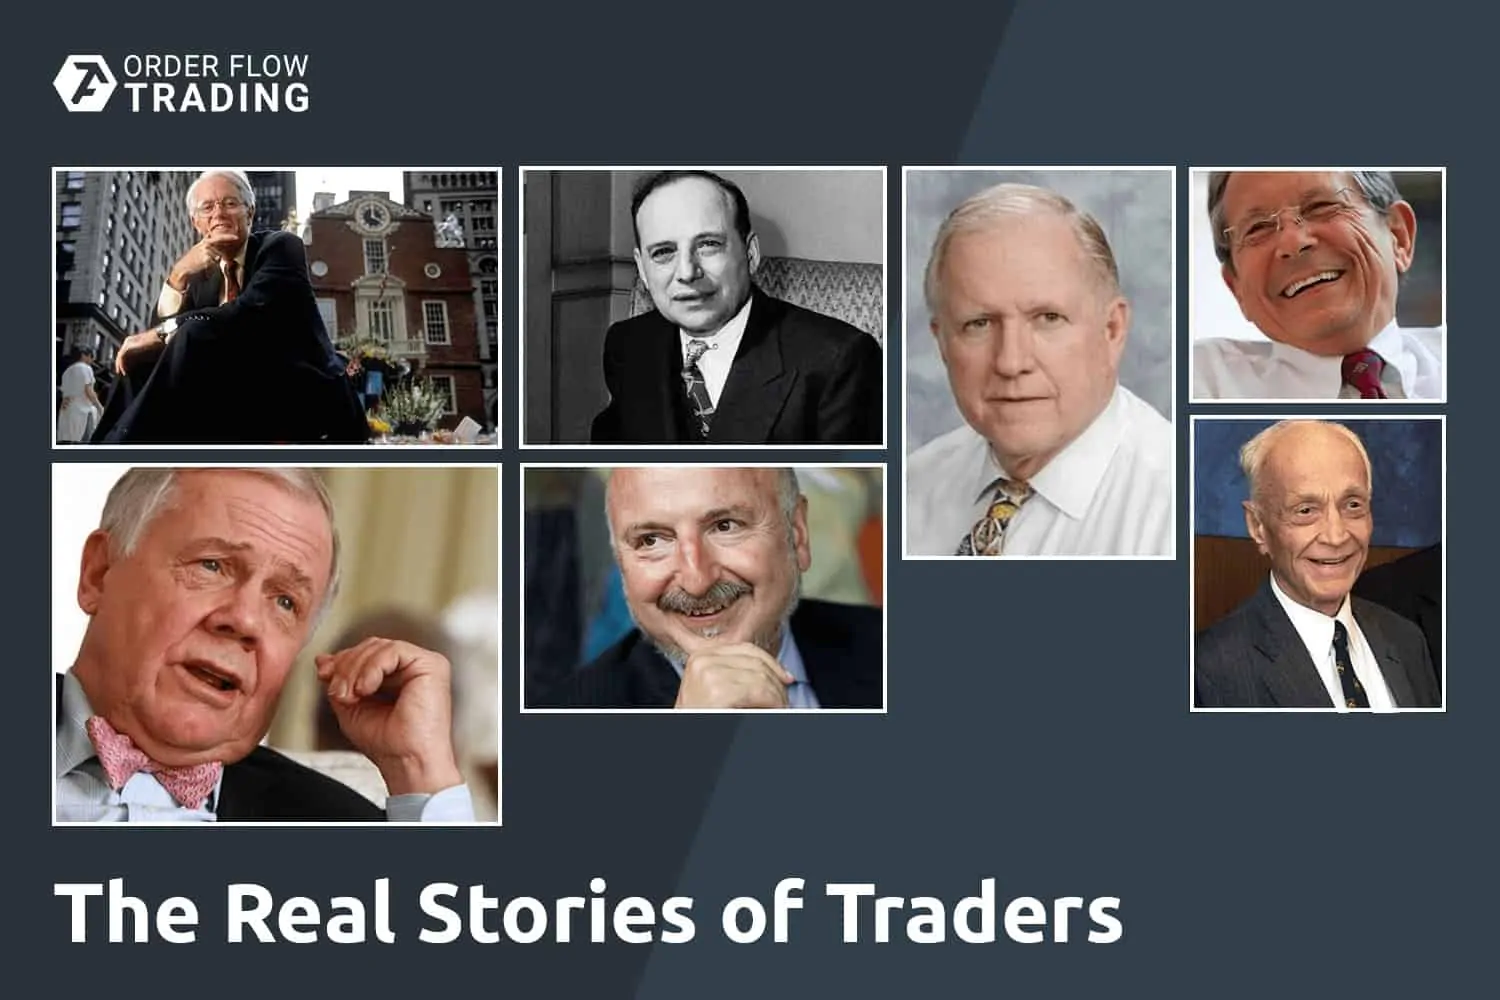 Real trader stories. Part 2